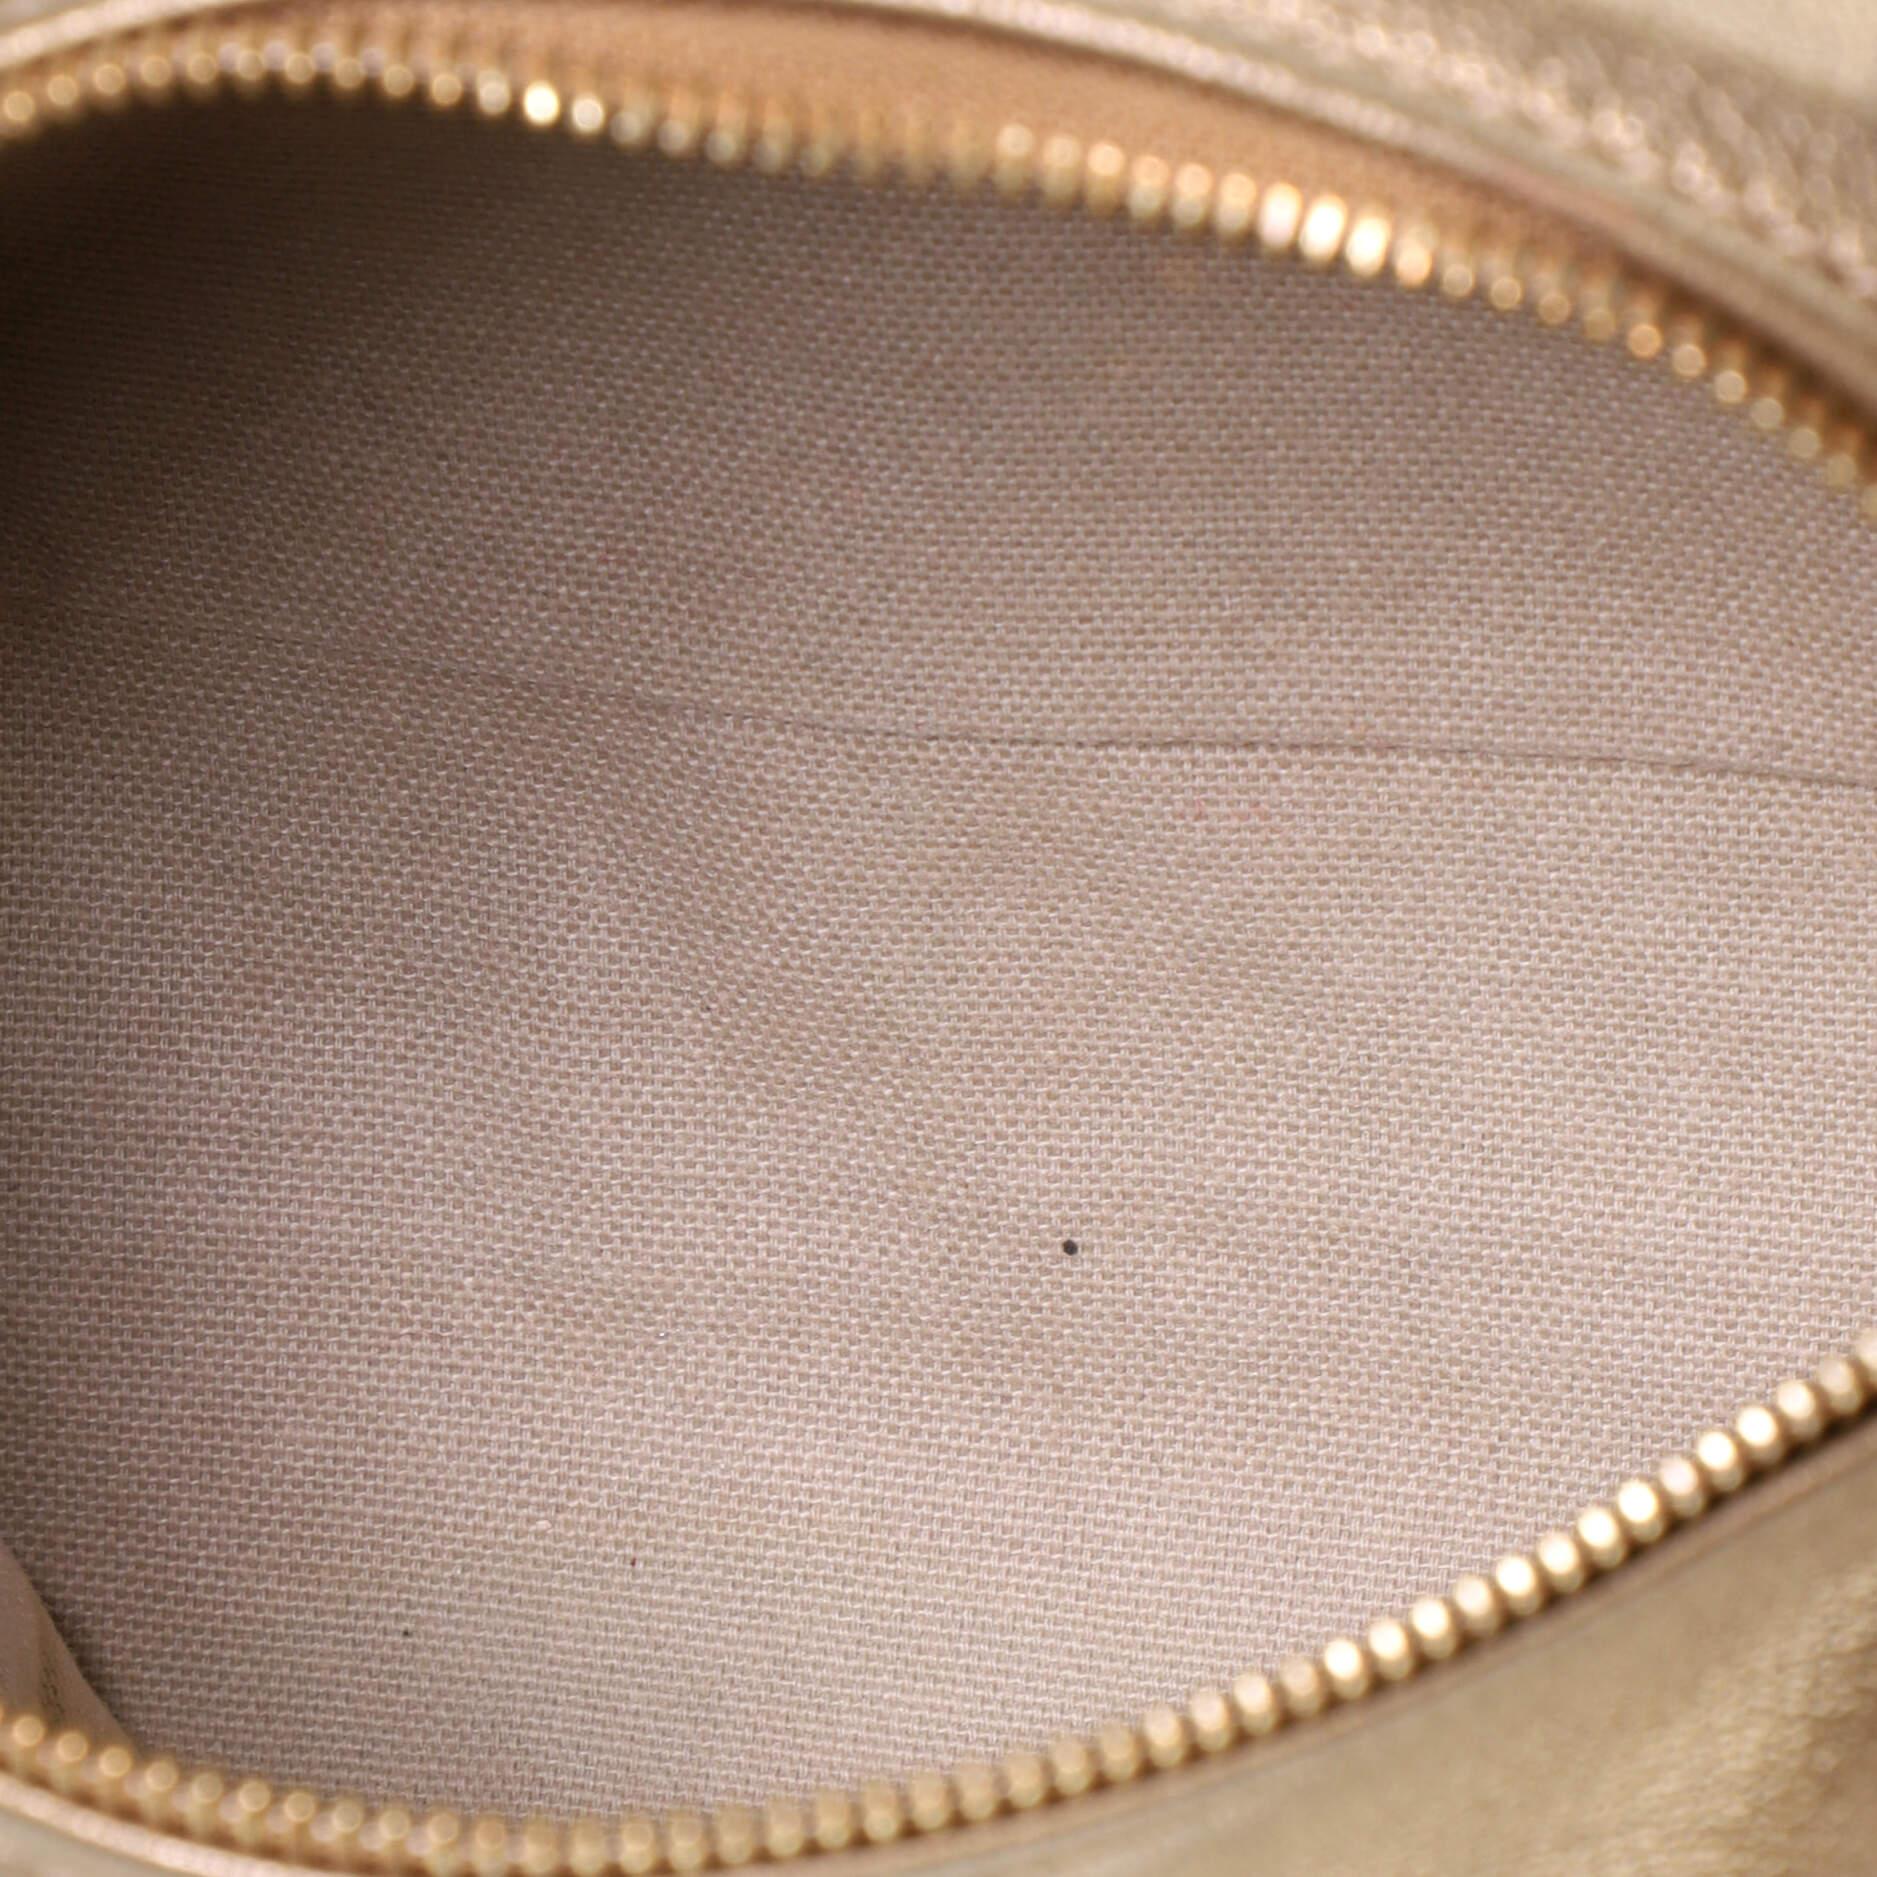 Givenchy Pandora Bag Leather Mini 1